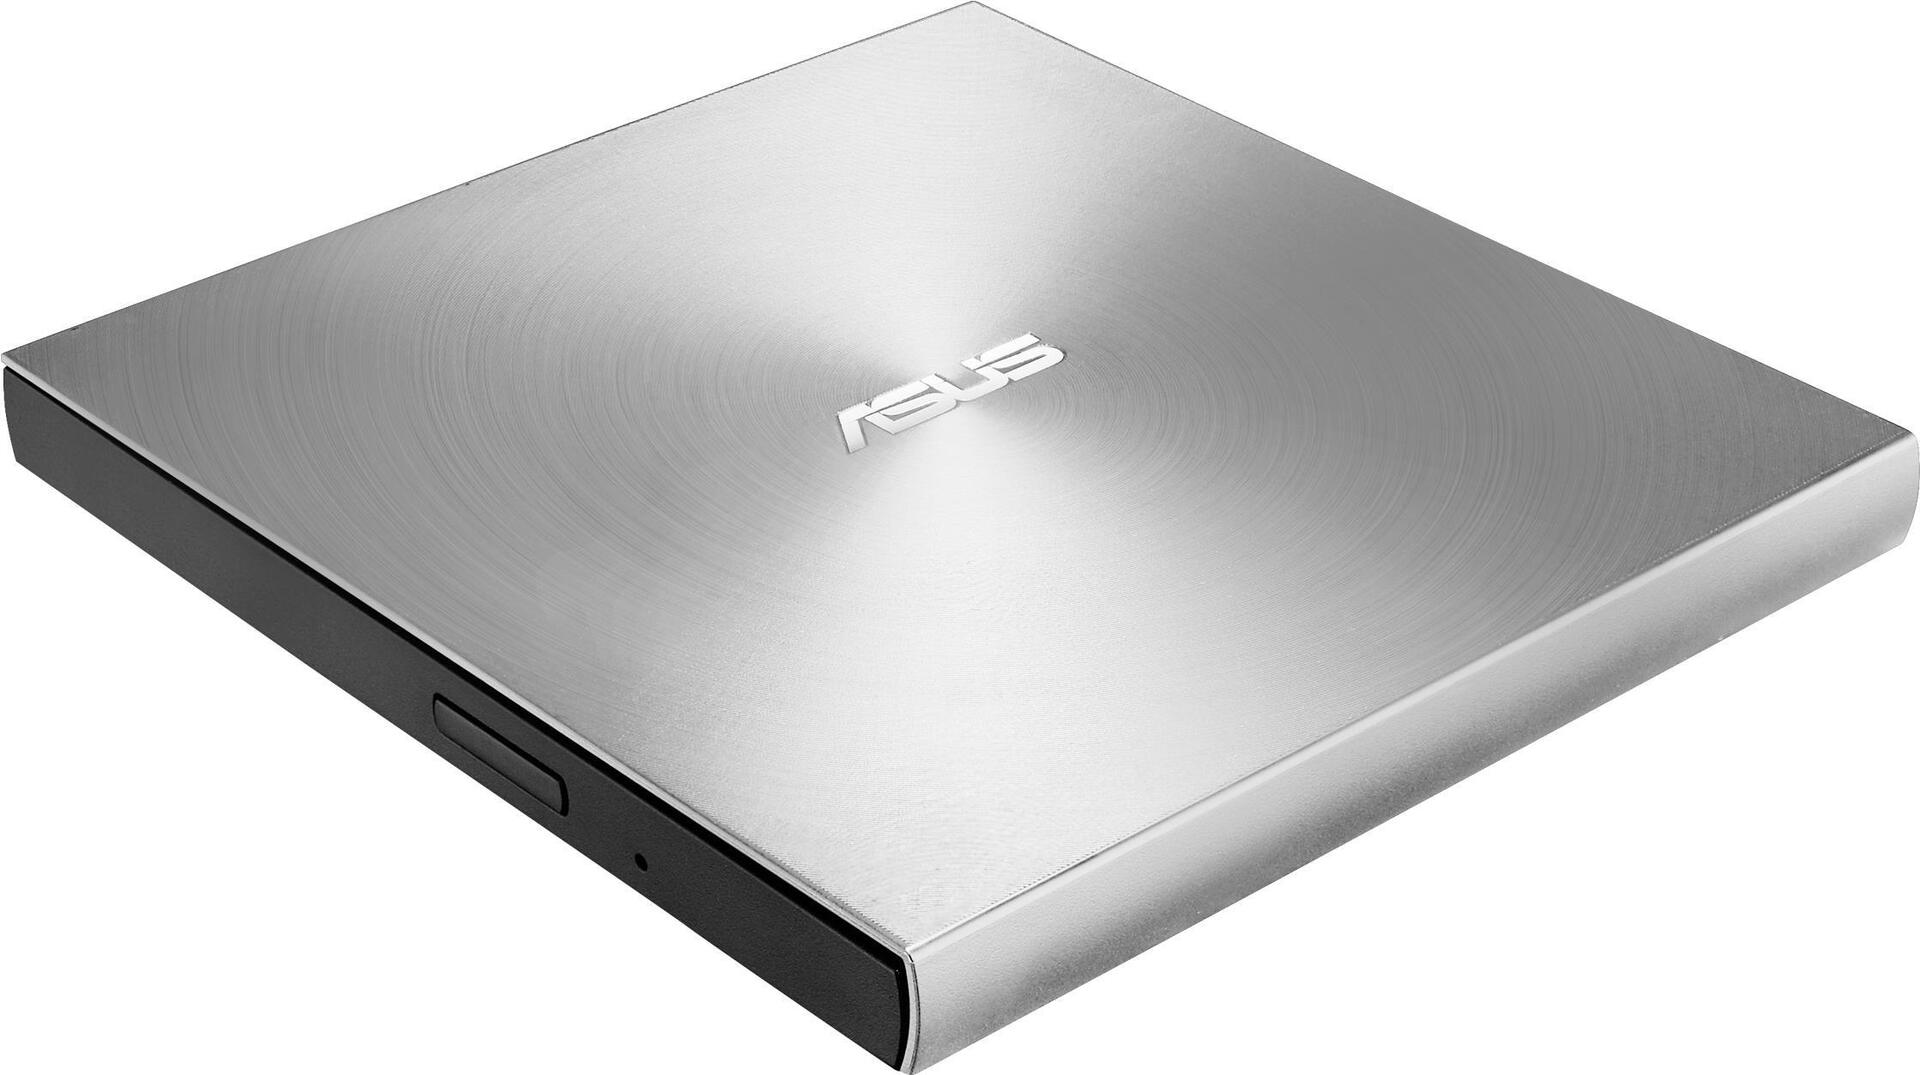 ASUS SDRW 08U8M U Laufwerk DVD RW ( R DL) 8x 8x USB C extern Silber (90DD0292 M29000)  - Onlineshop JACOB Elektronik